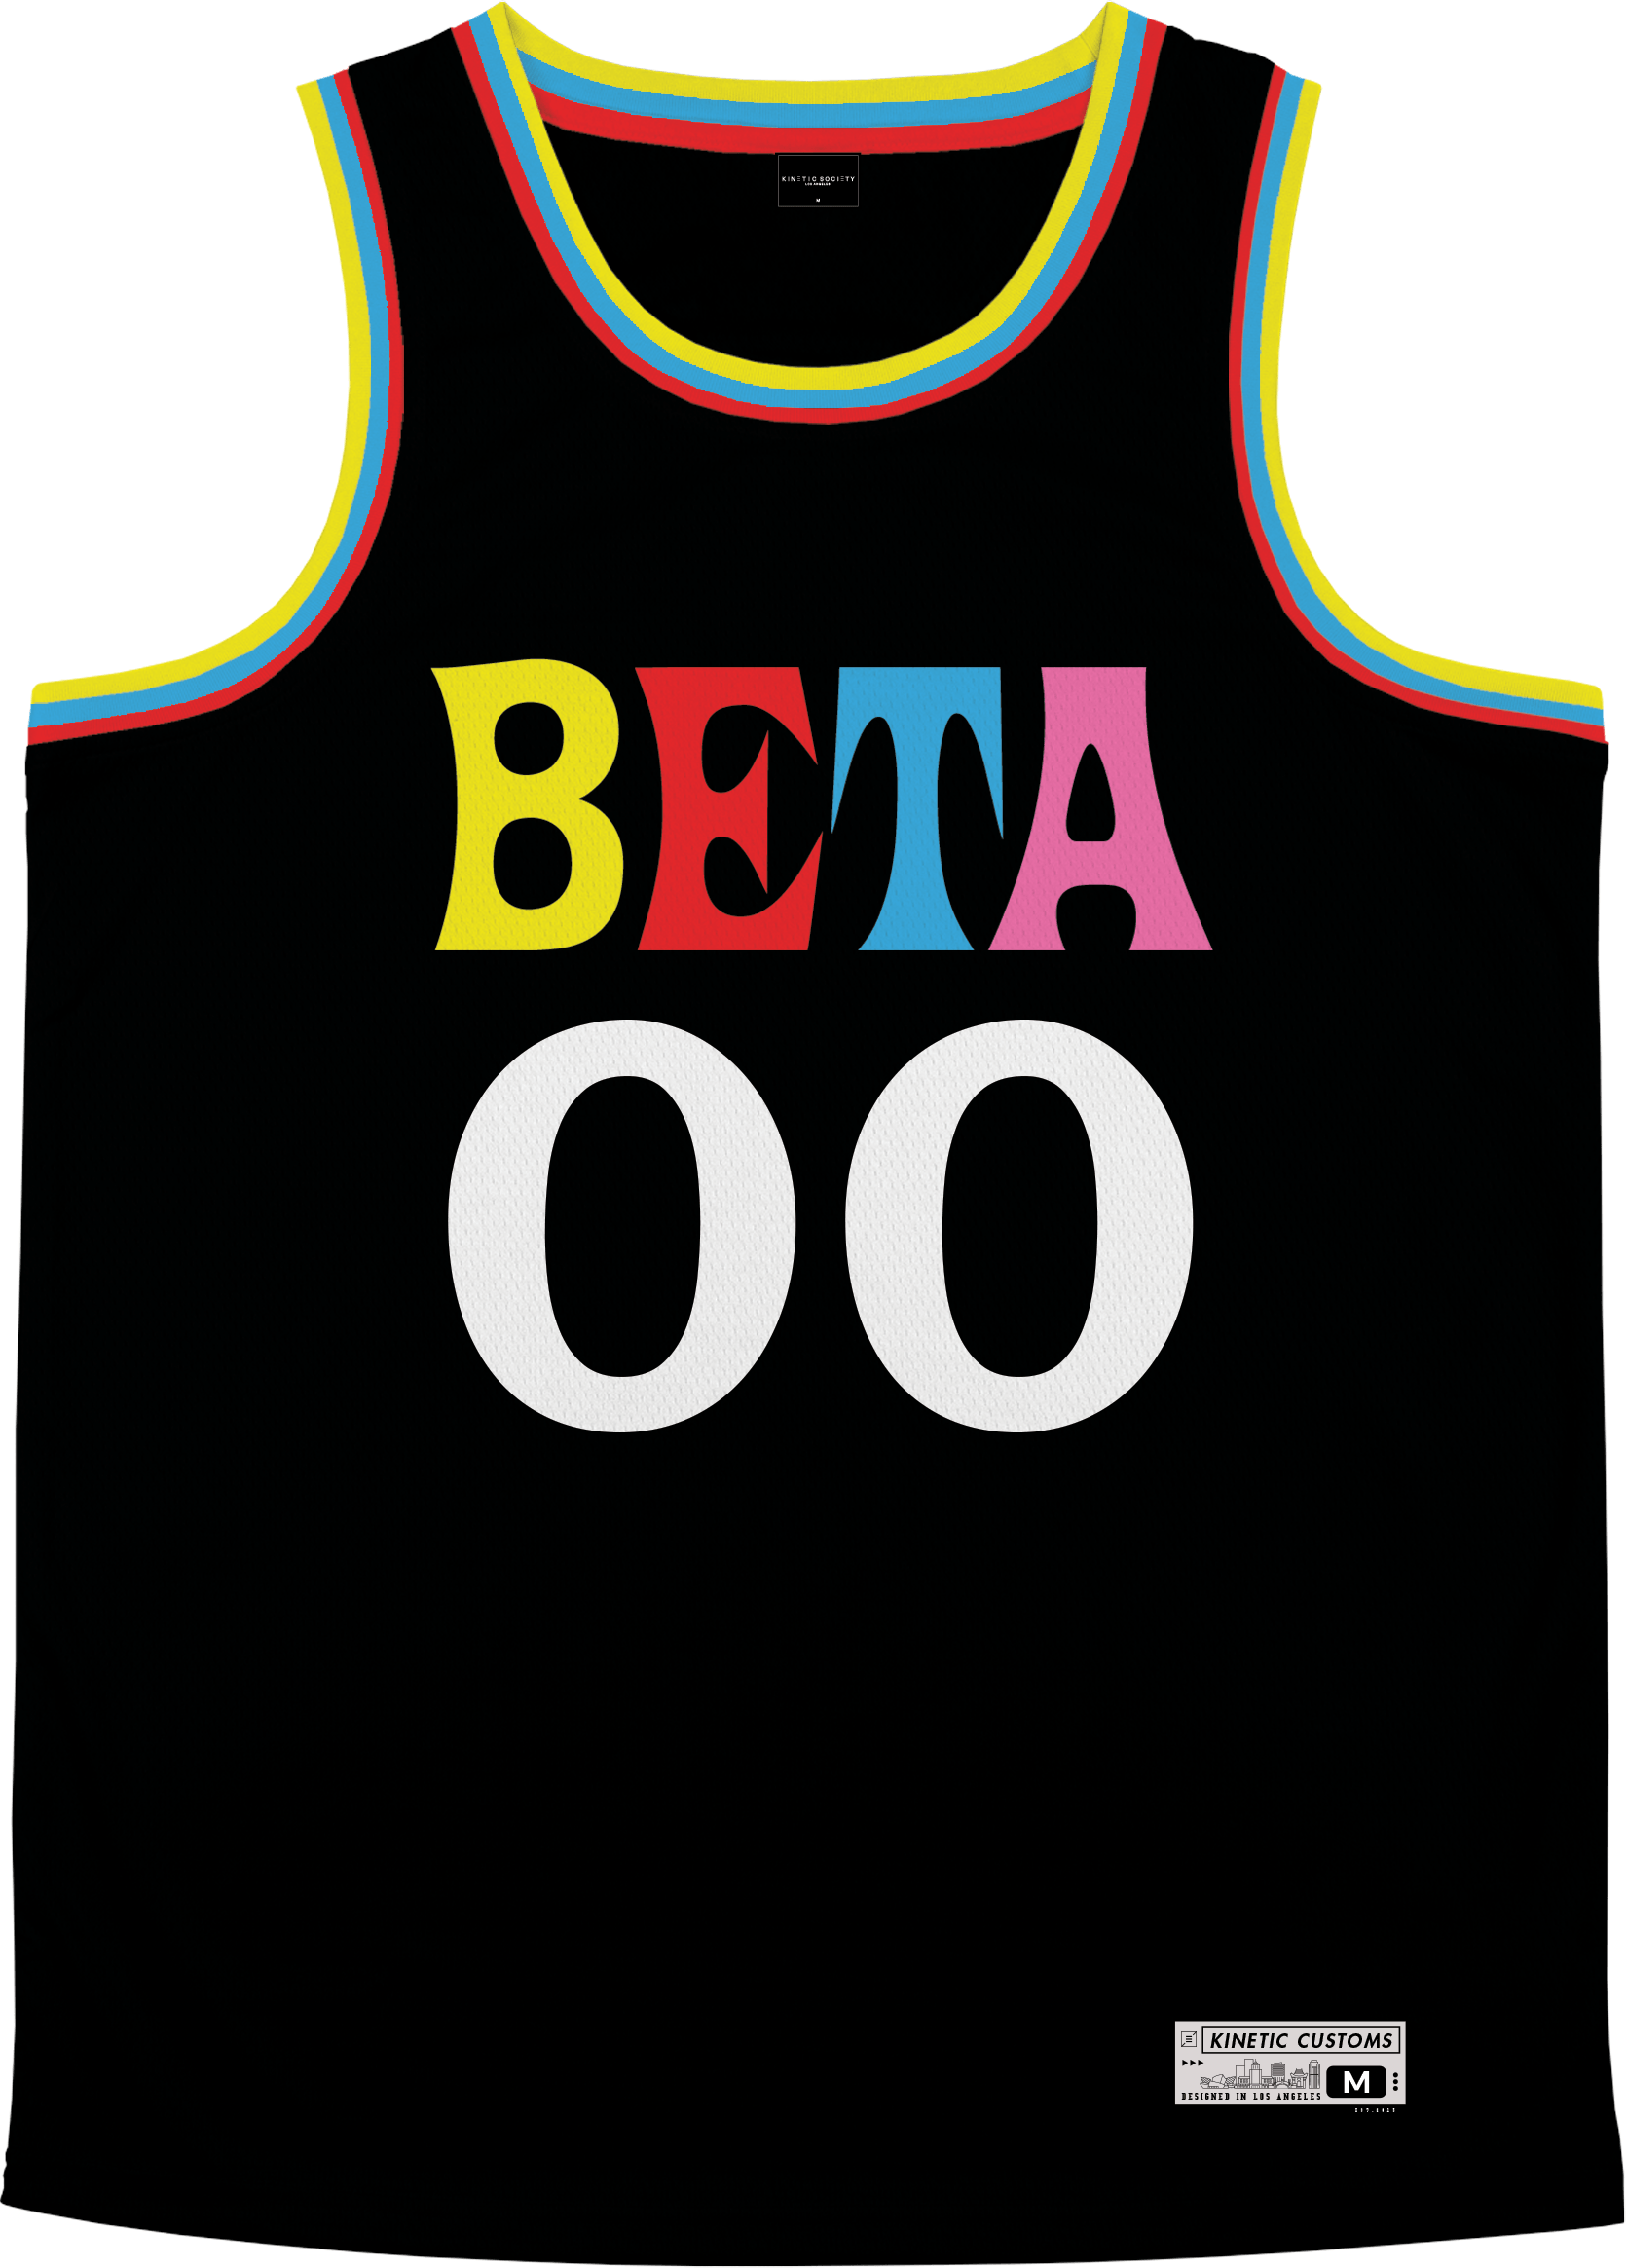 Beta Theta Pi - Crayon House Basketball Jersey - Kinetic Society